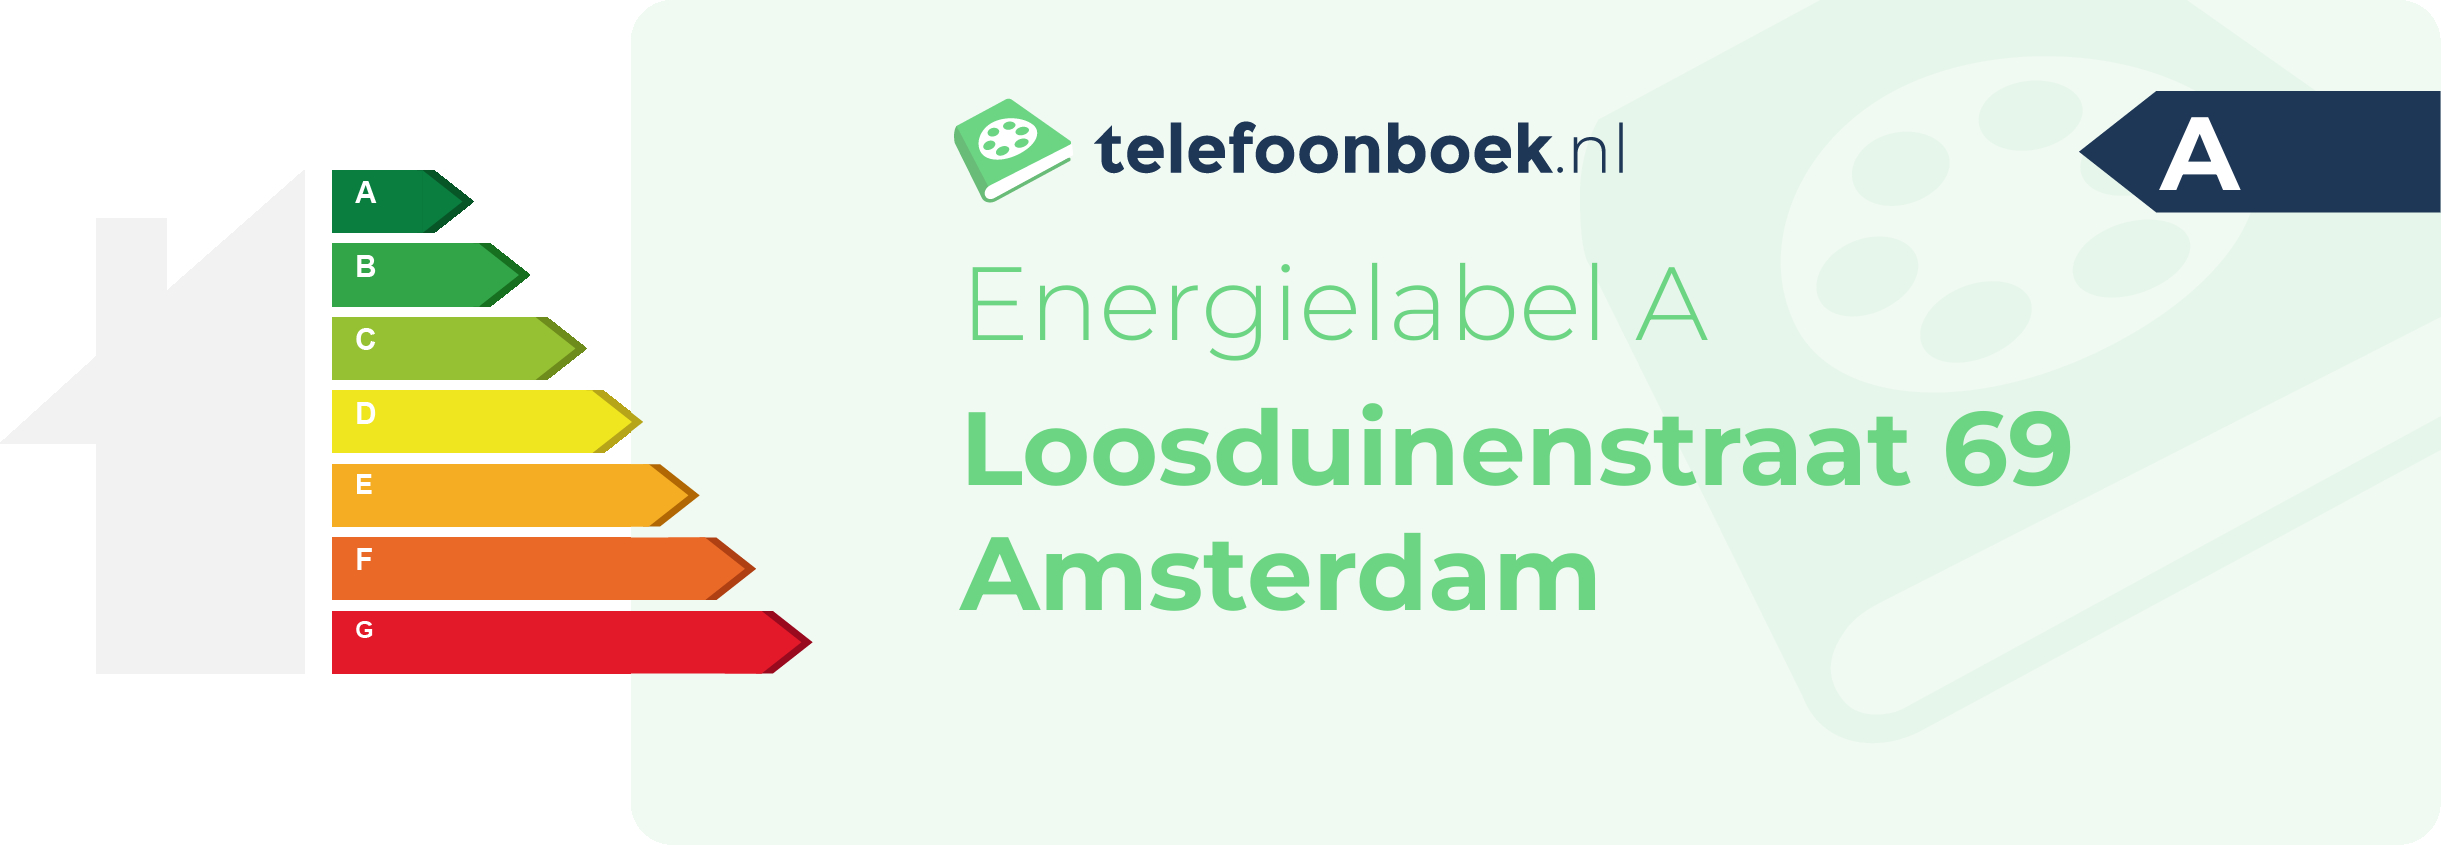 Energielabel Loosduinenstraat 69 Amsterdam